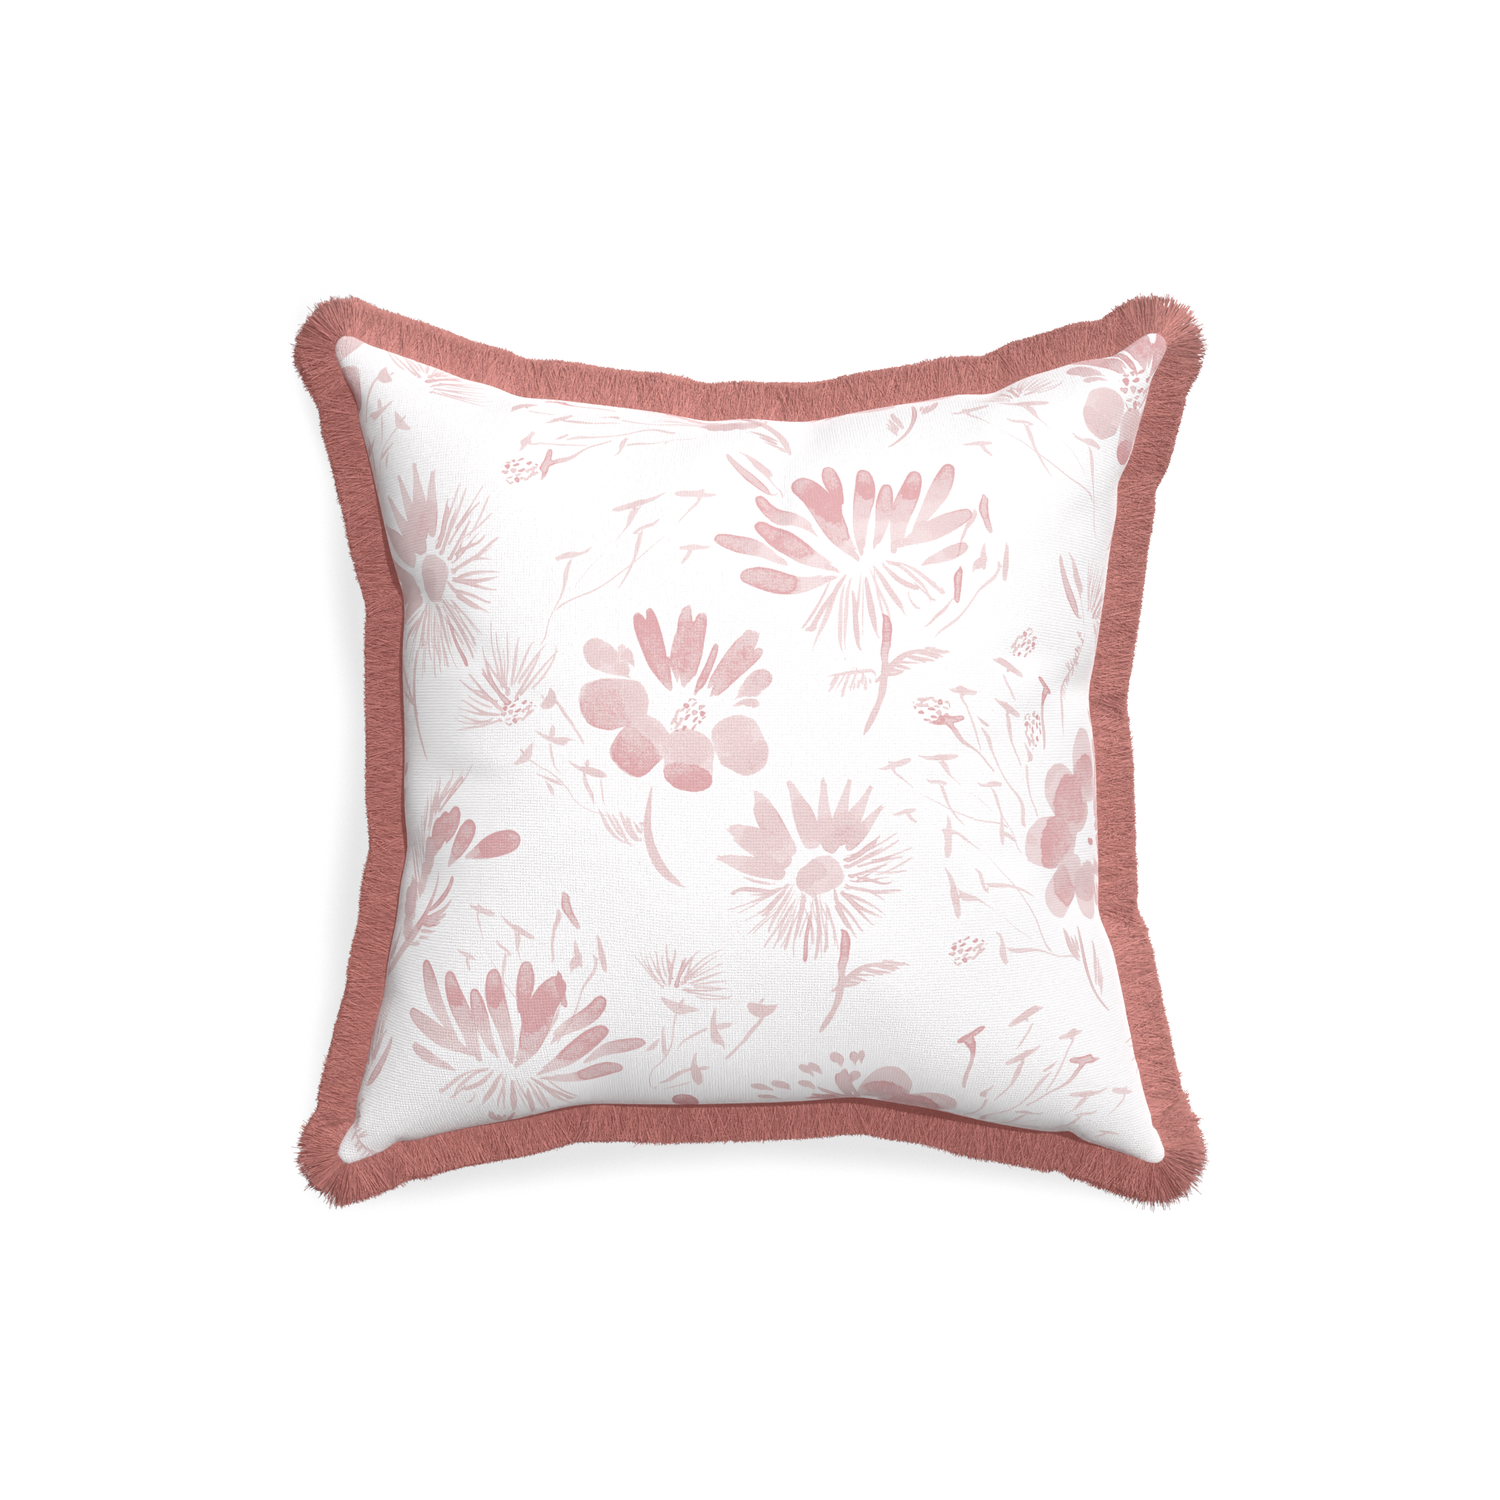 18-square blake custom pillow with d fringe on white background